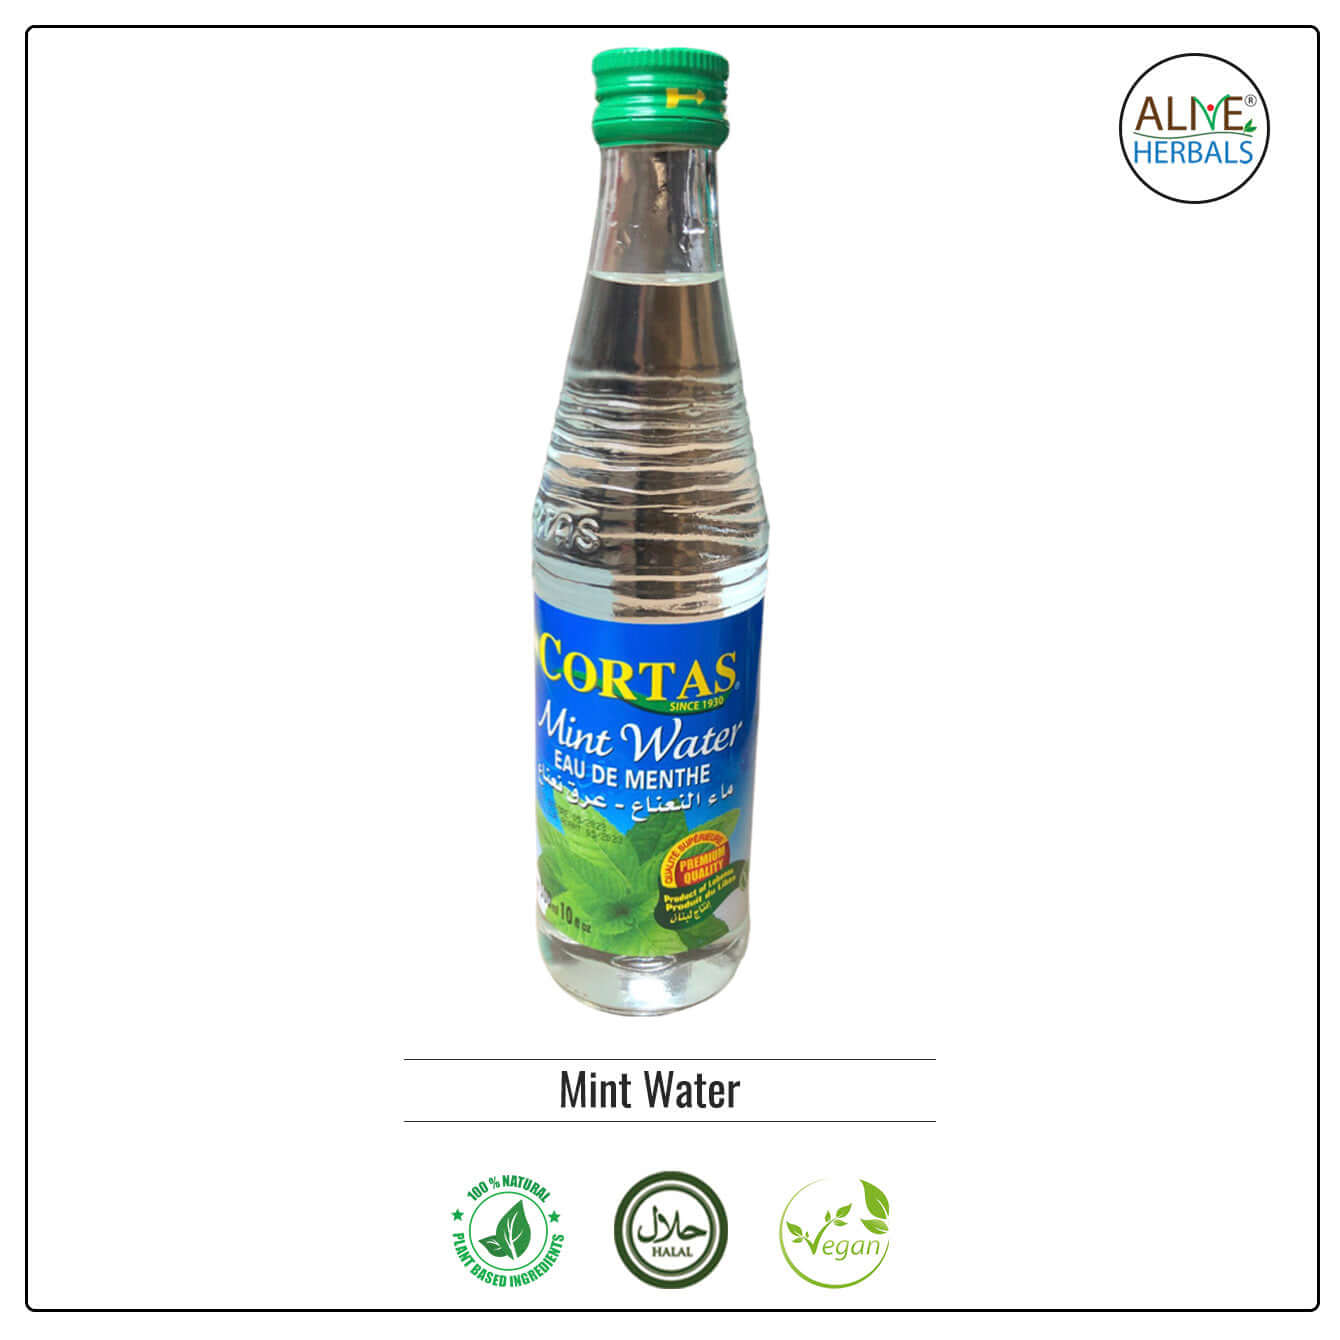 Mint Water - Cortas - Buy at Natural Food Store | Alive Herbals.